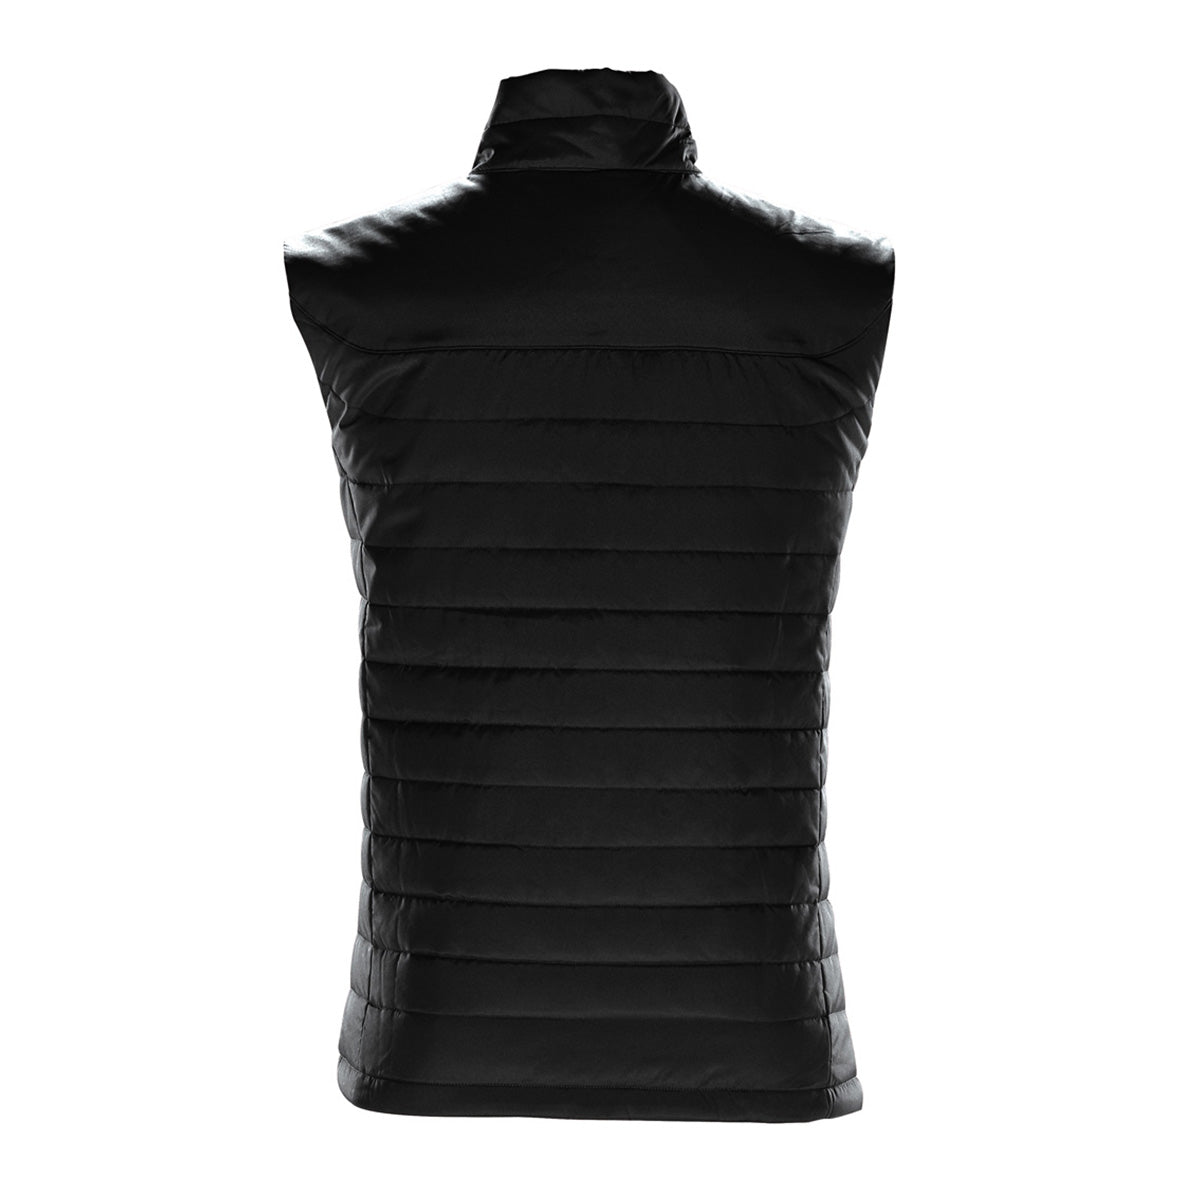 Quilted Lightweight Athletic Vest - Black